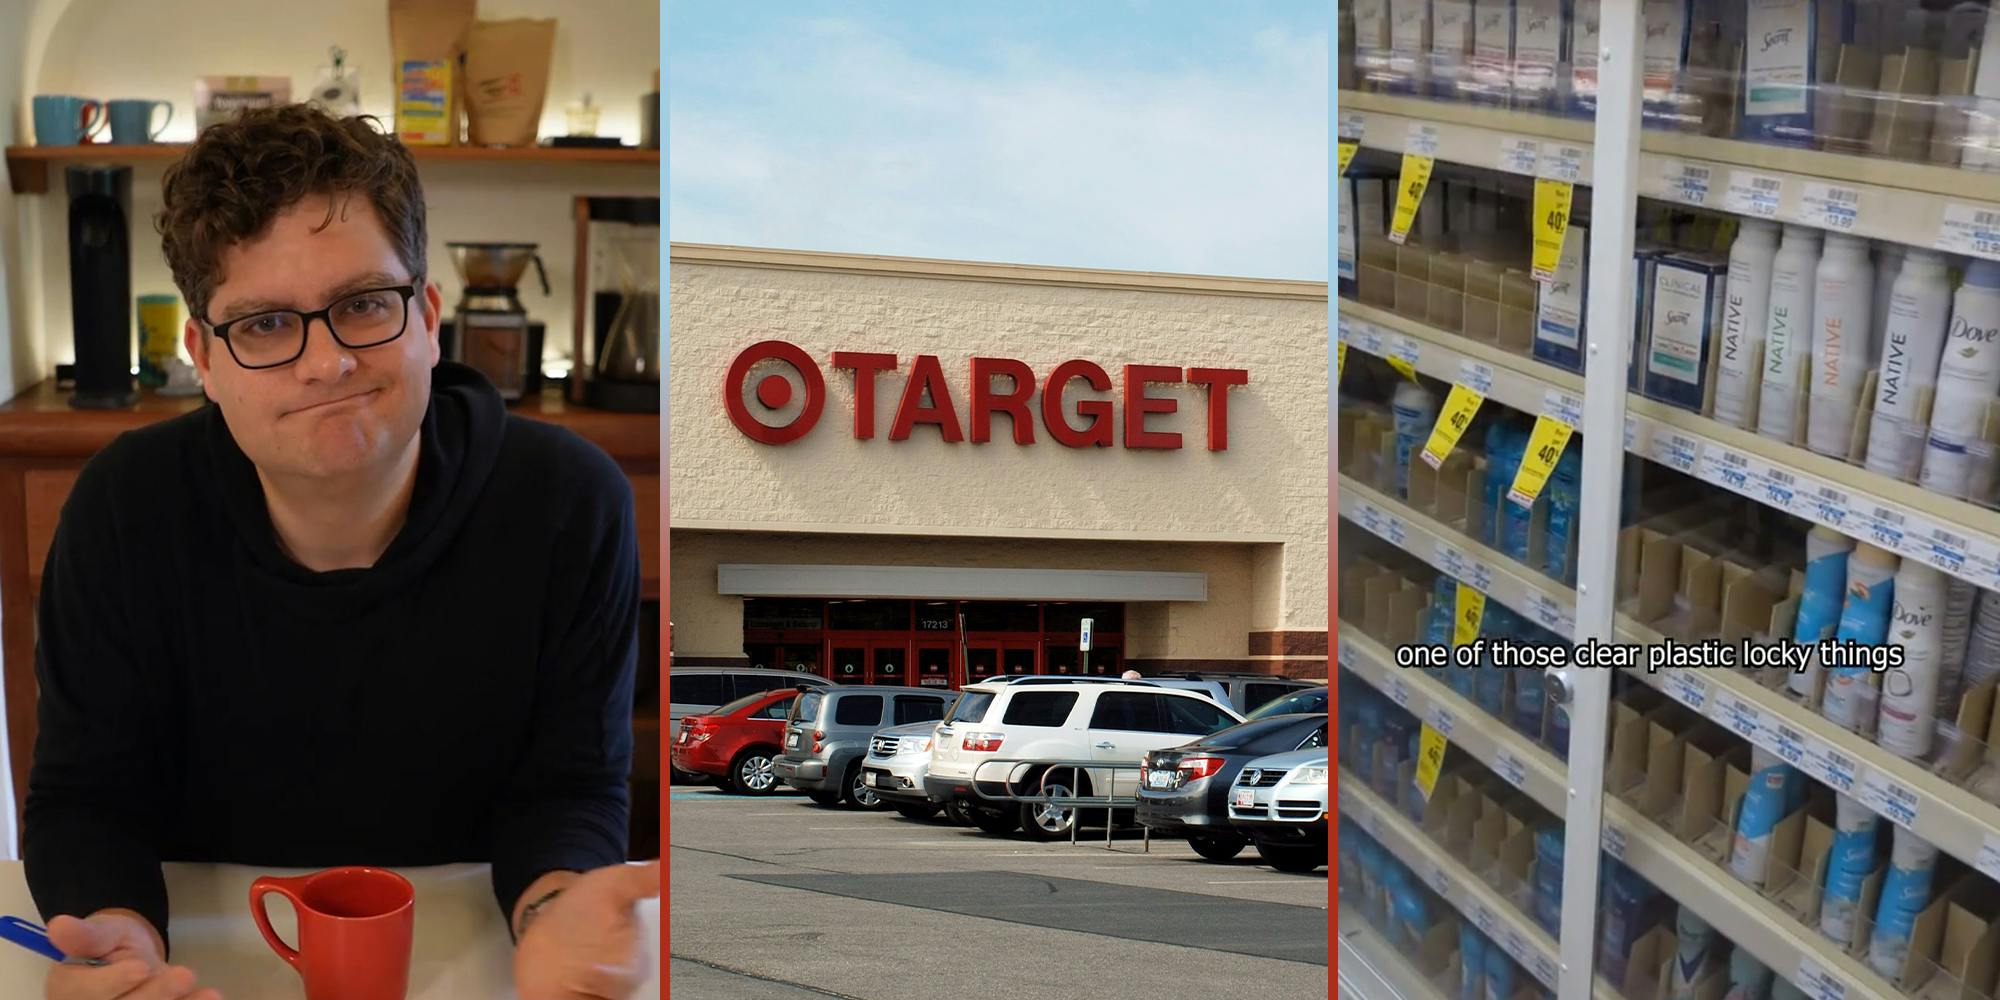 Man calls out Target's 'shampoo vault'